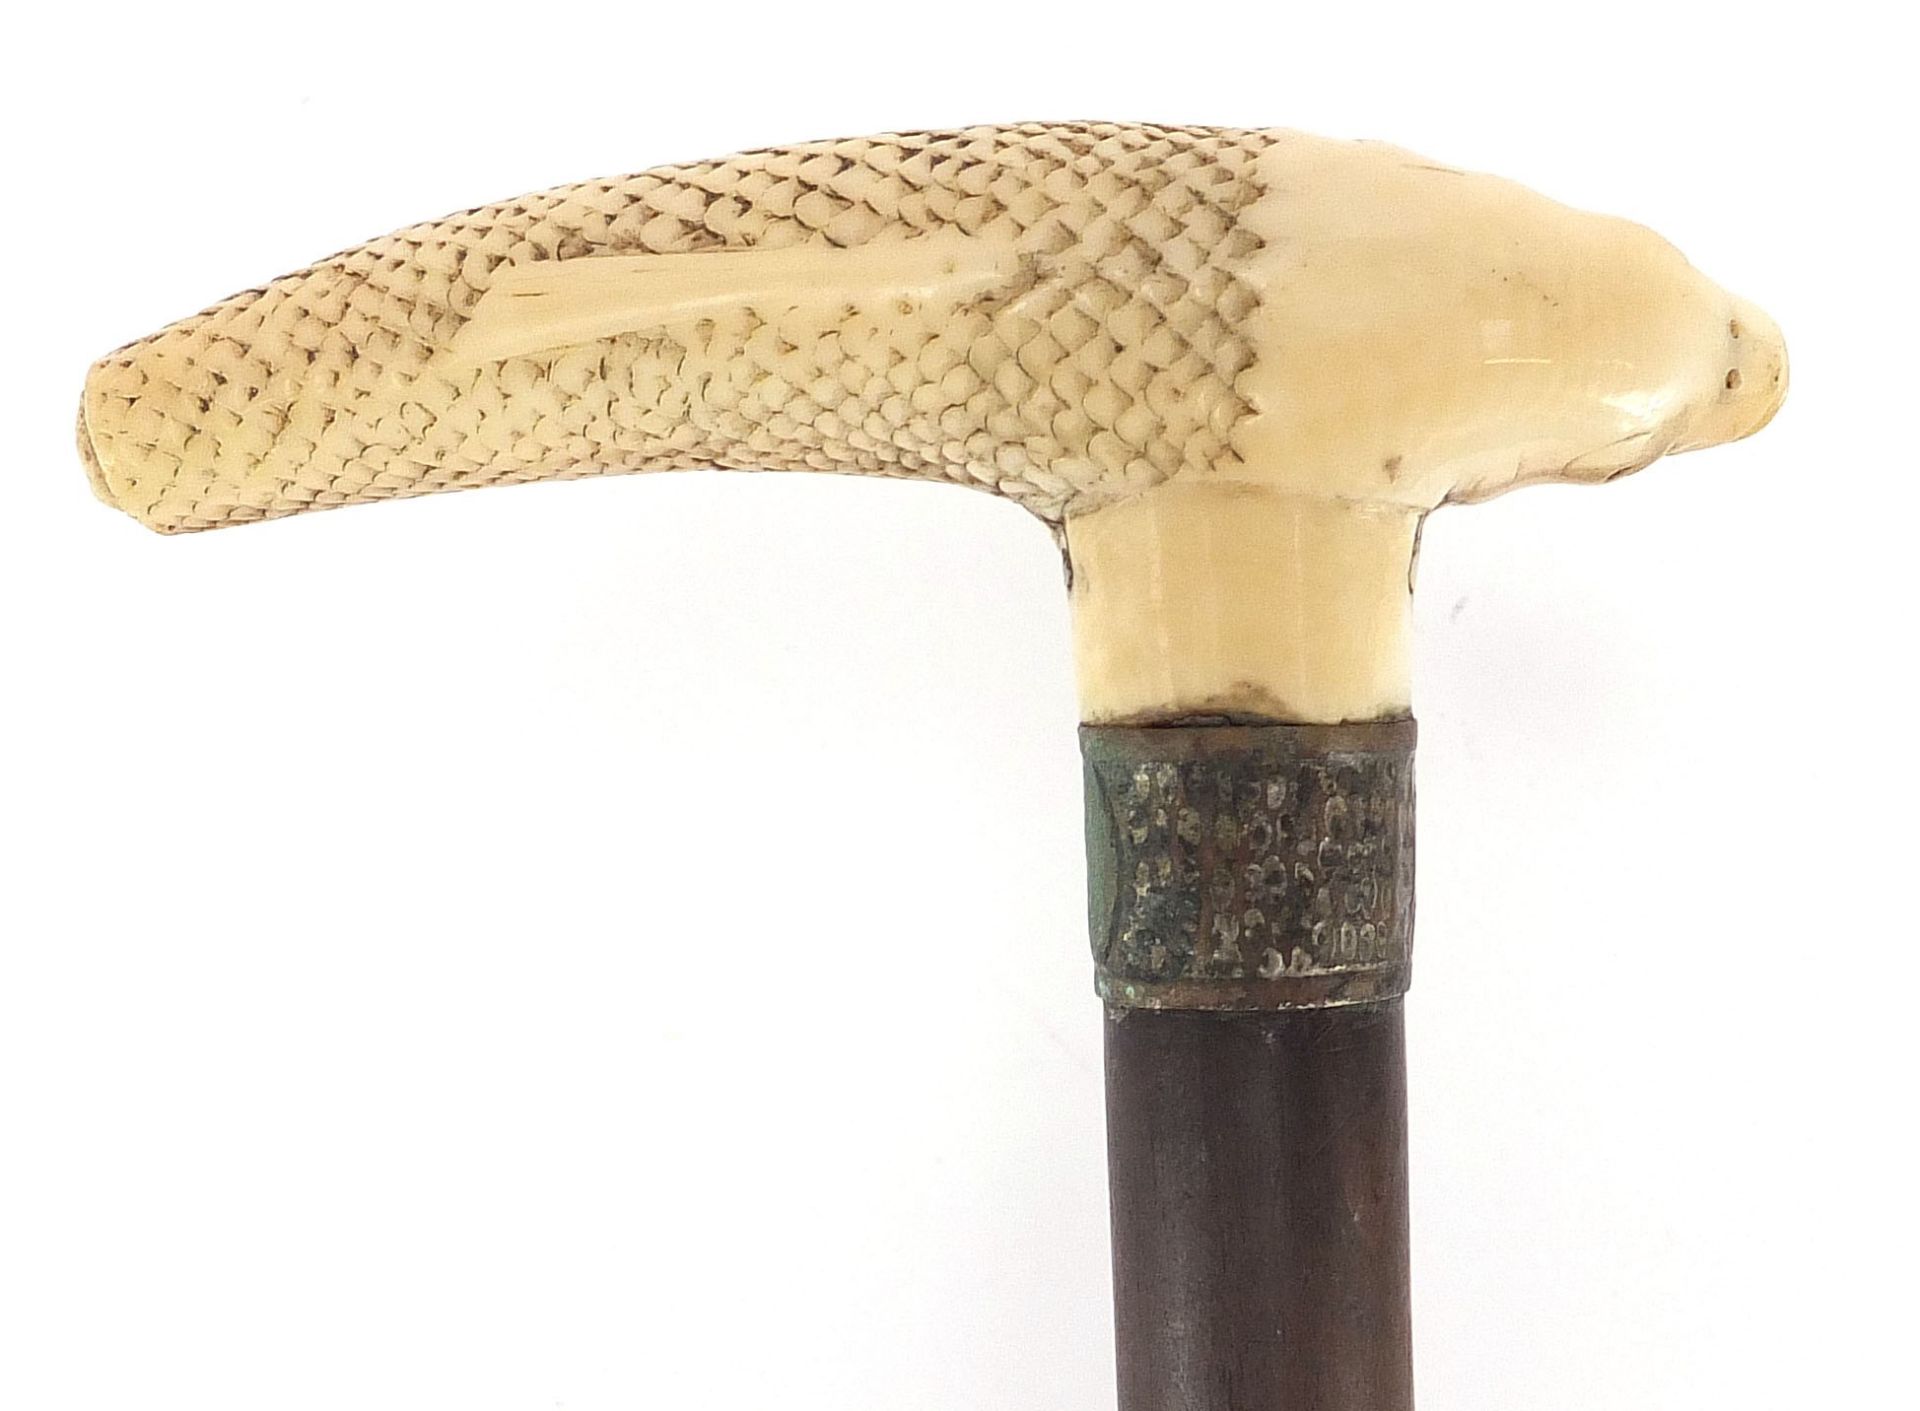 Hardwood walking stick with carved ivory Koi carp handle, 88cm in length - Image 4 of 7